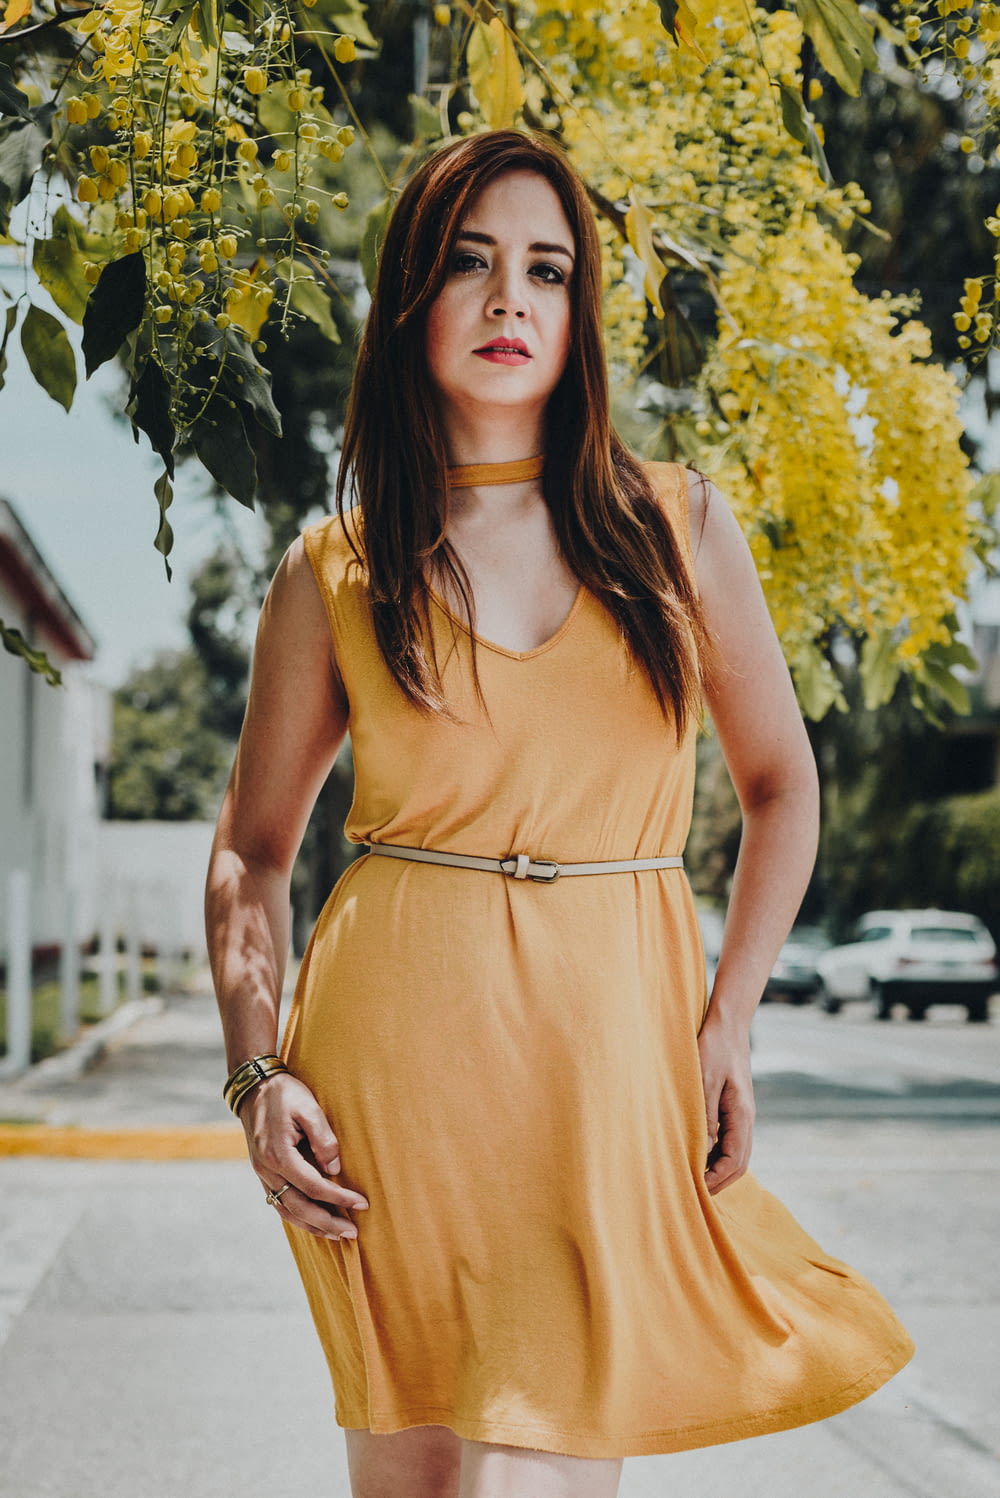 woman wearing orange sleeveless dress standing near yellow flower tree